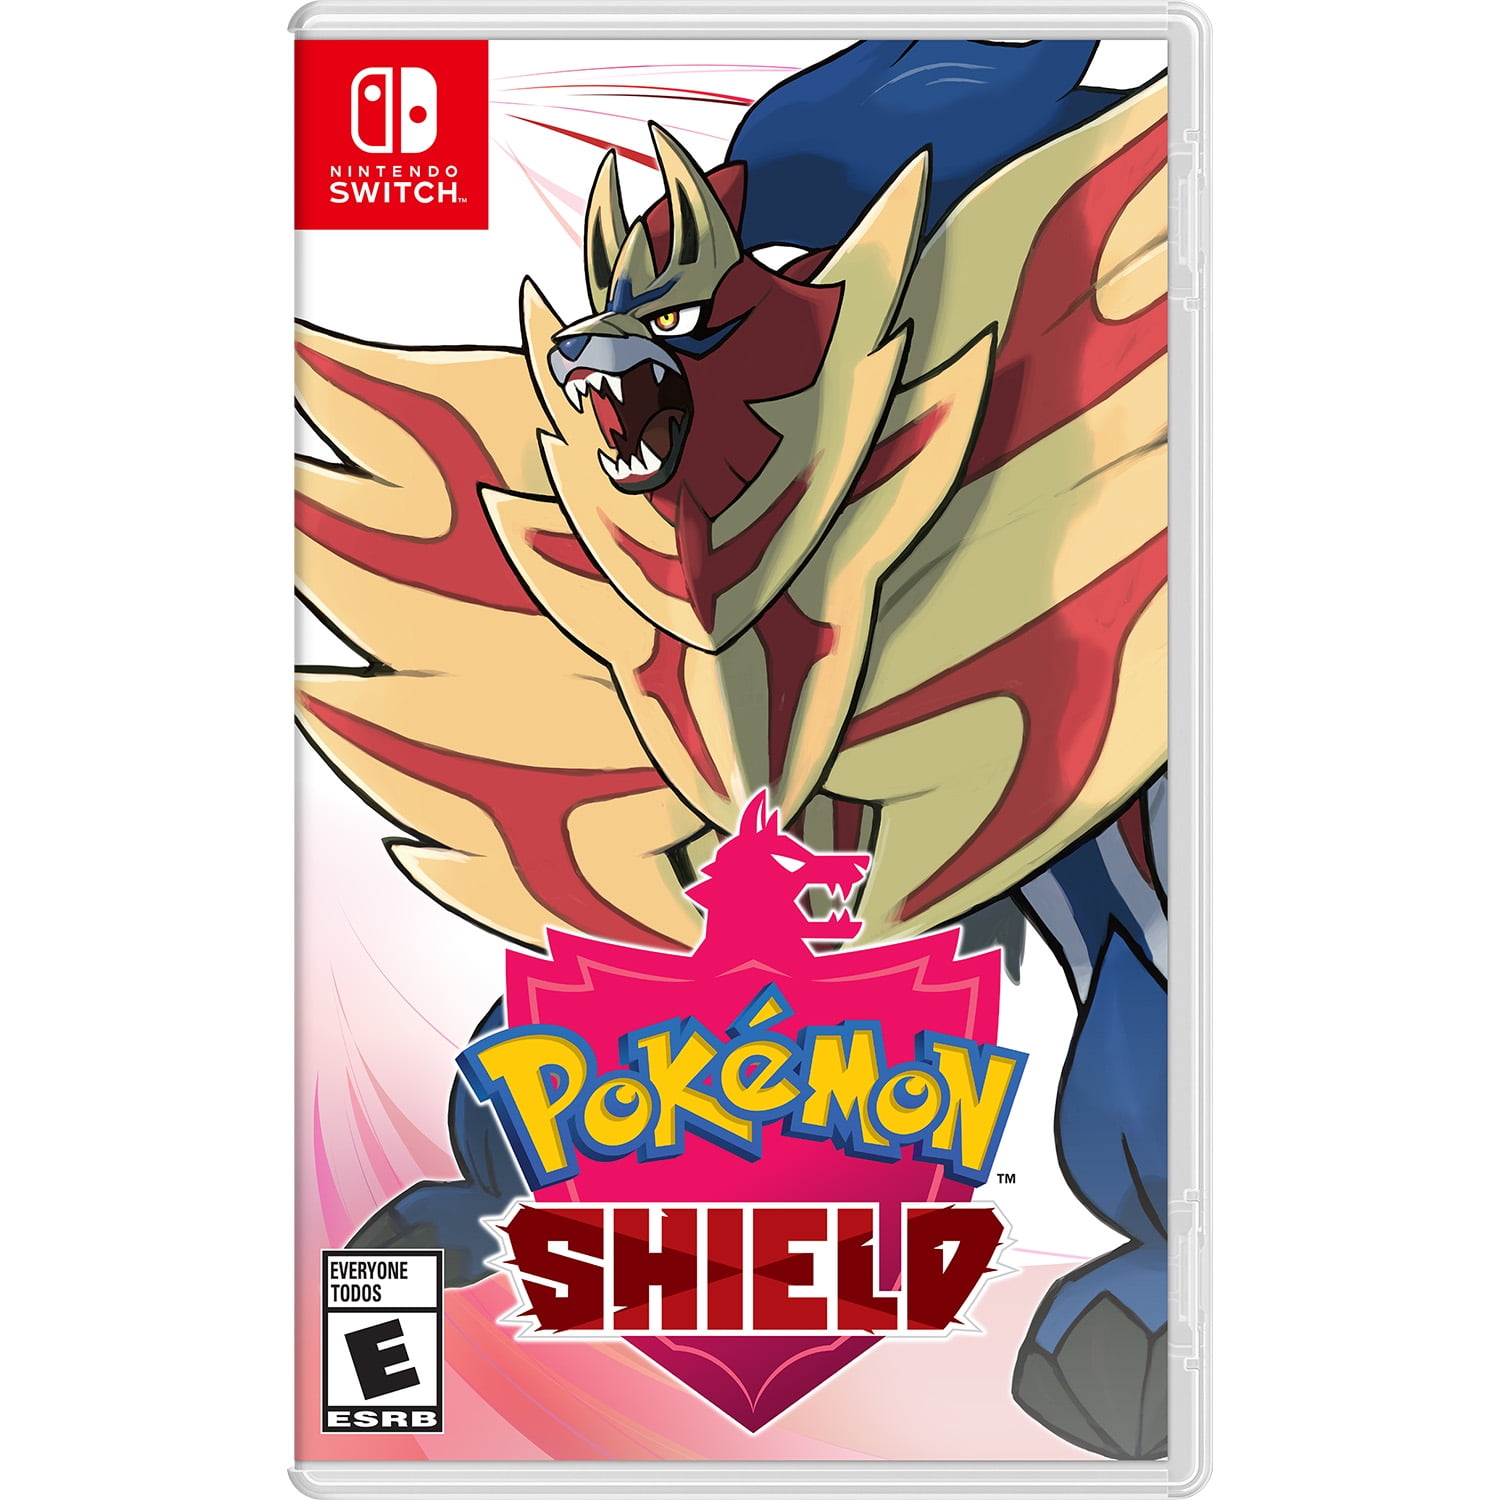 Pokémon Sword and Shield Review (Switch)